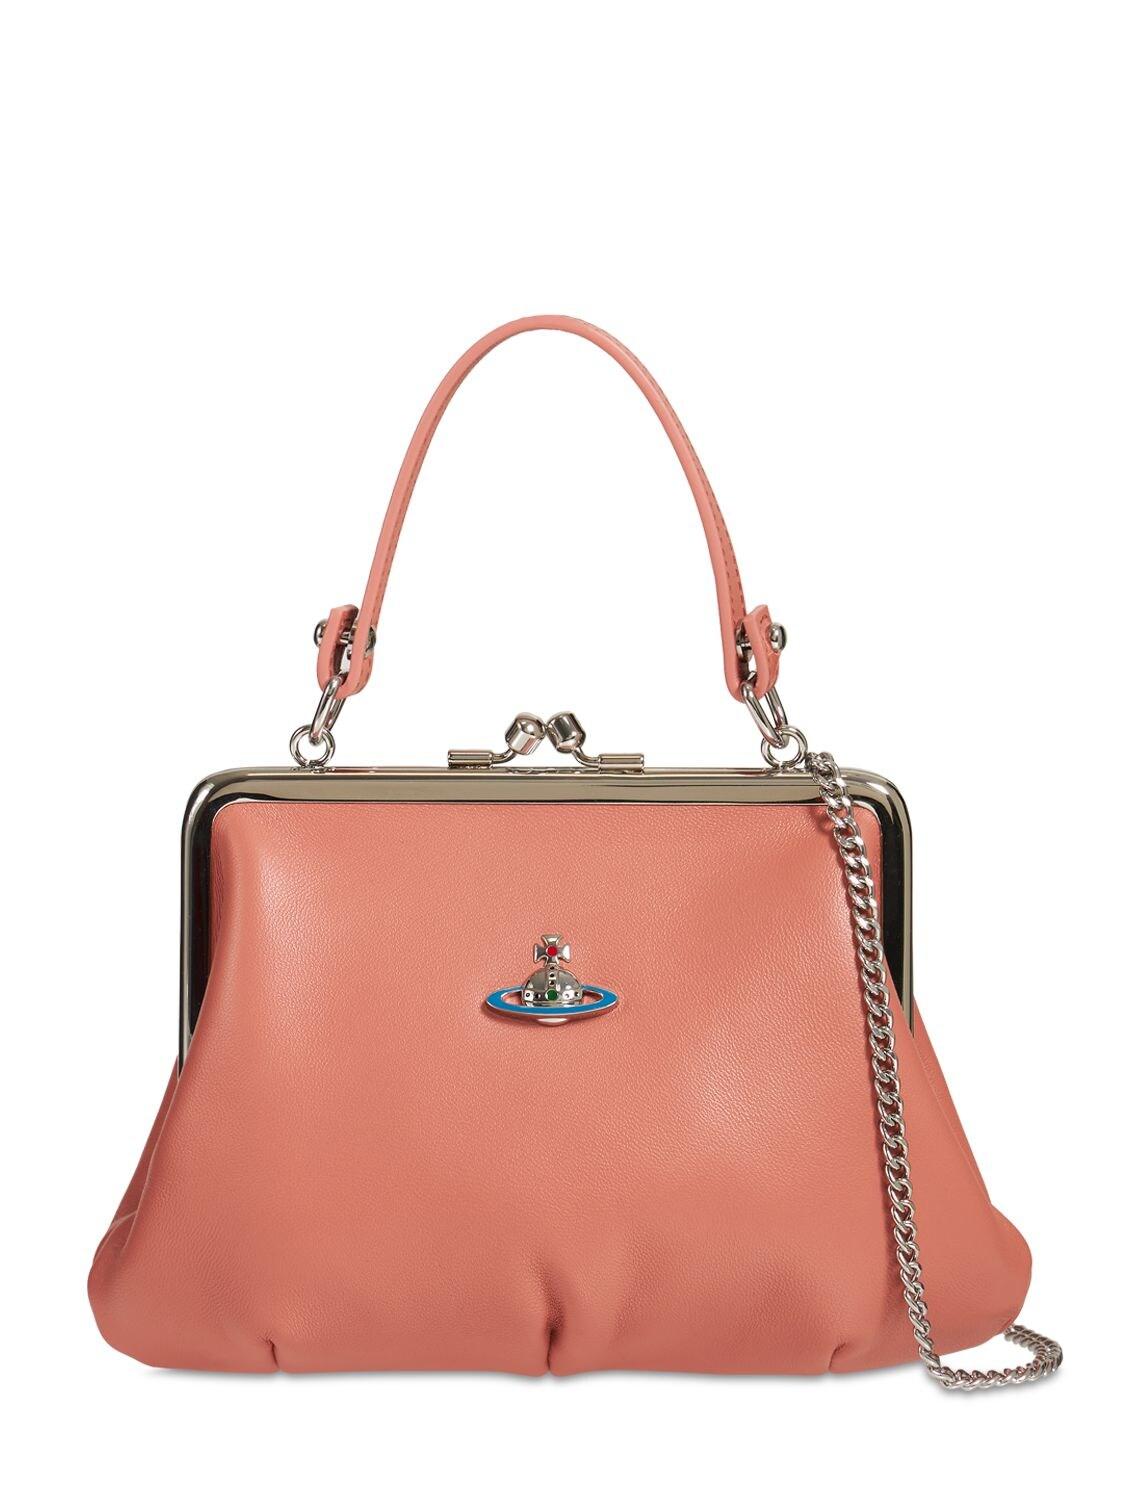 Vivienne Westwood Granny Frame Nappa Leather Bag in Pink | Lyst UK